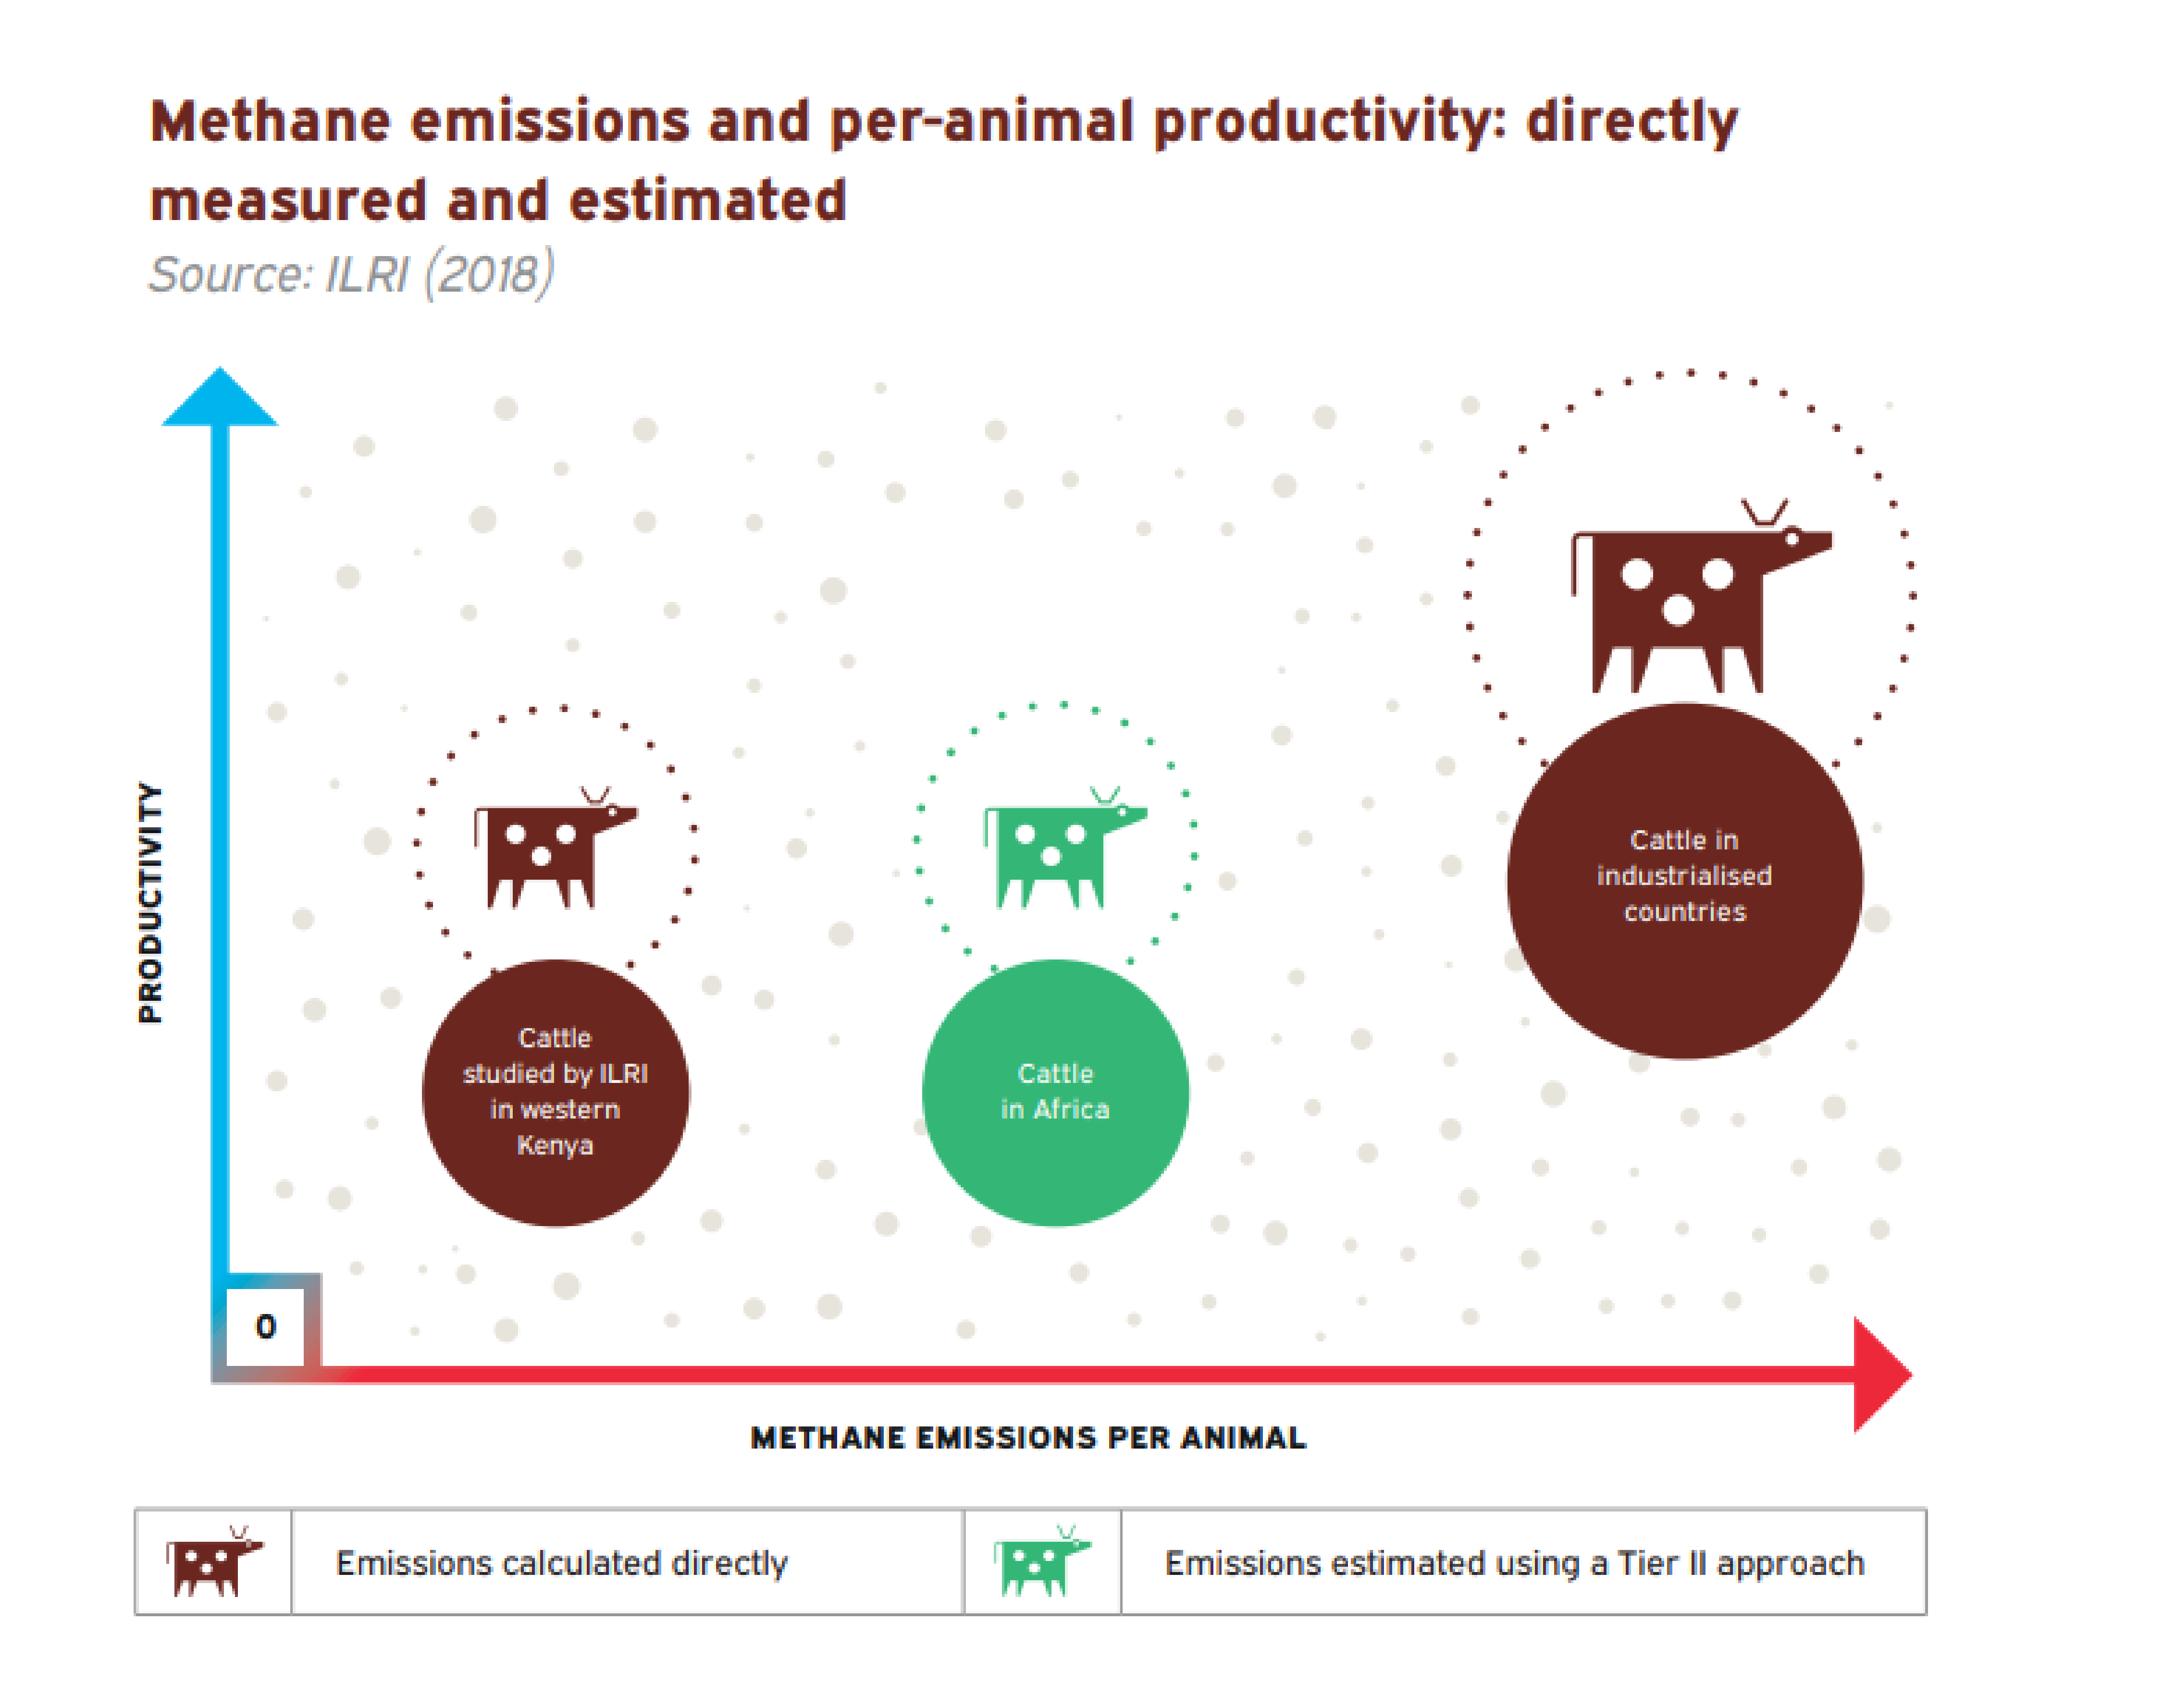 Methane emissions per animal